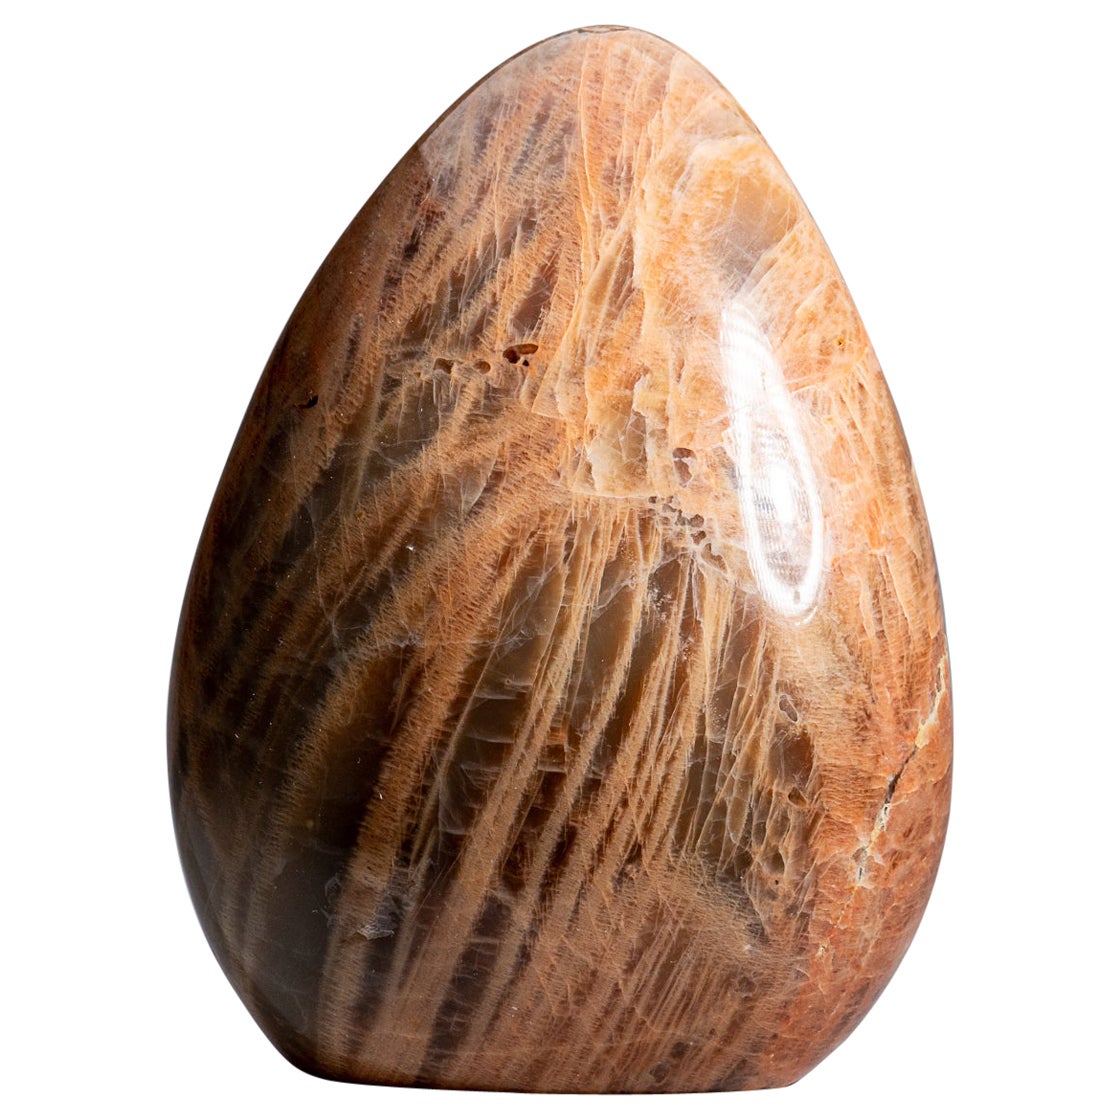 Genuine Polished Peach Moonstone Freeform from Madagascar (6.8 lbs) For Sale